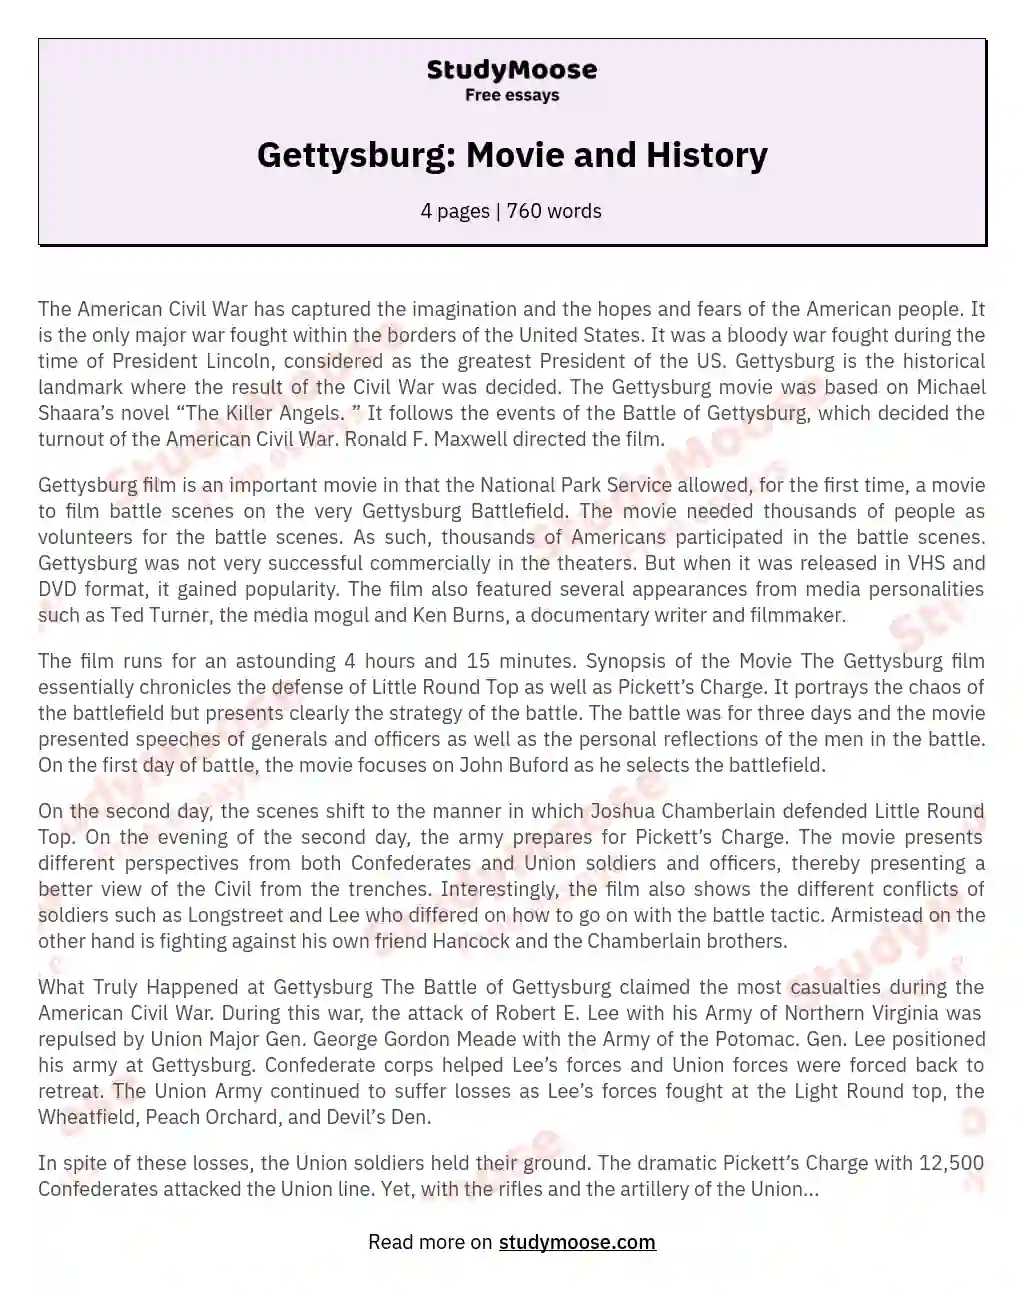 Gettysburg: Movie and History essay